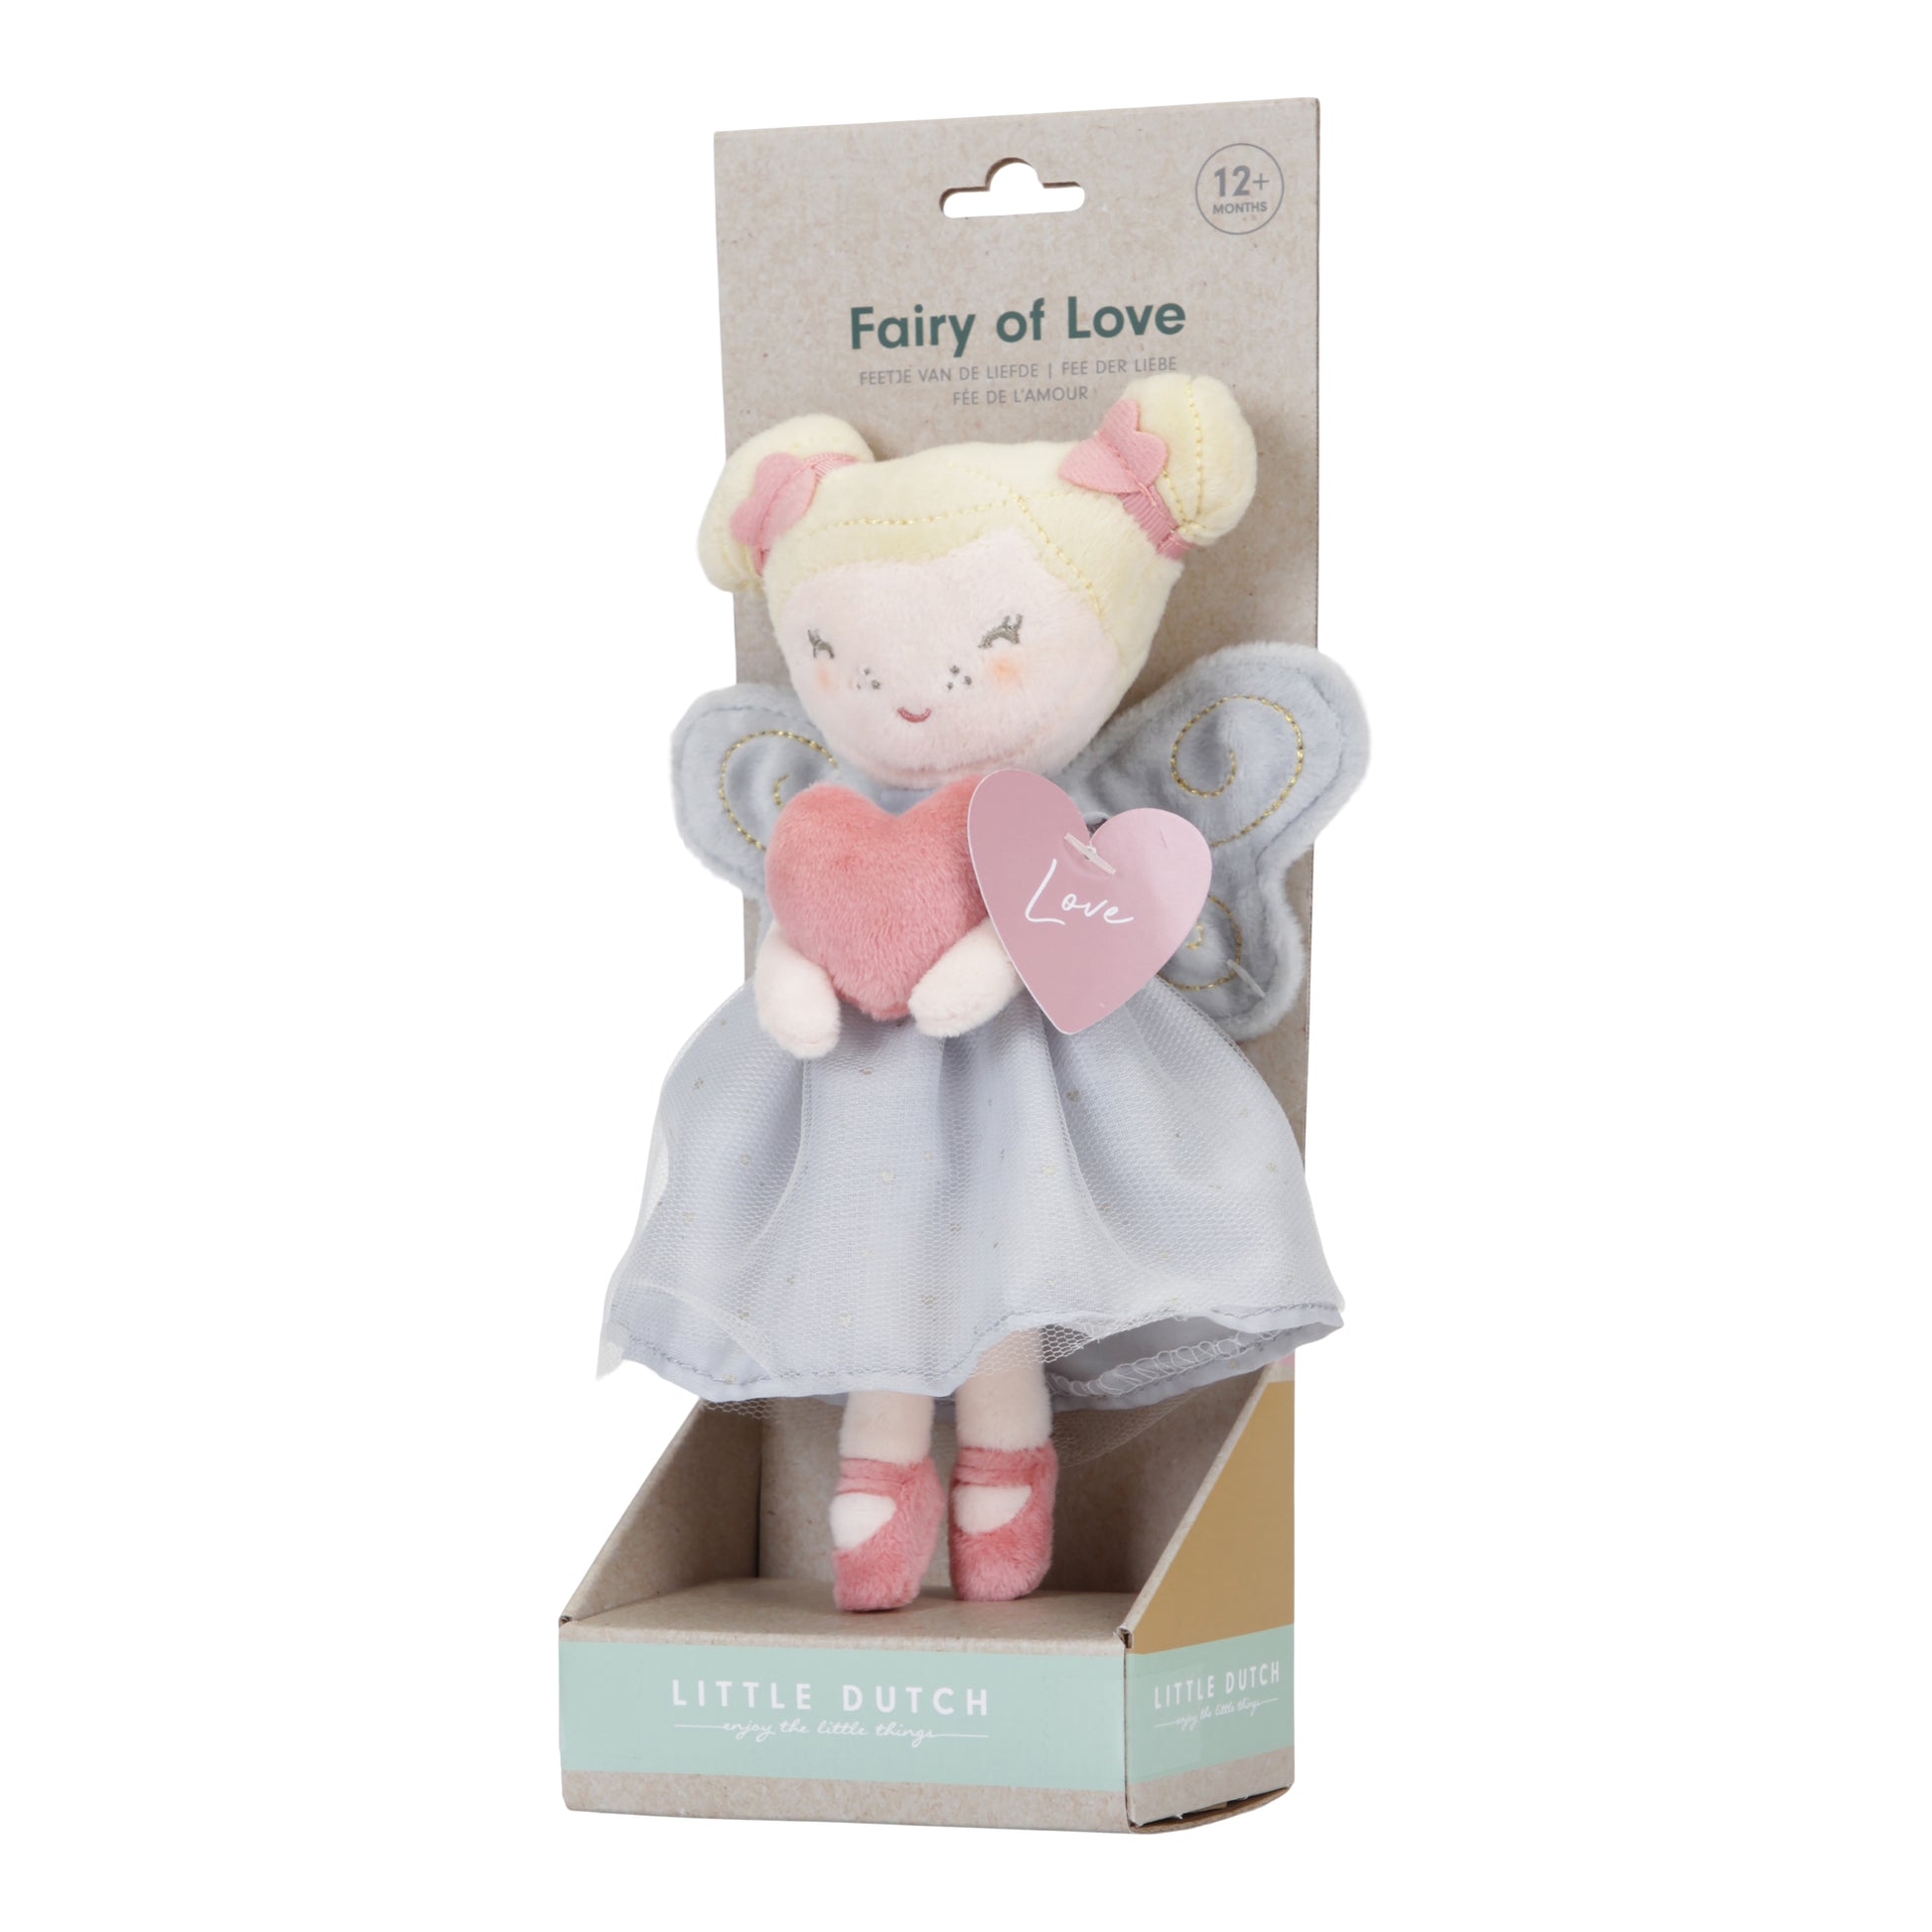 Little Dutch Fairy of Love doll in her box